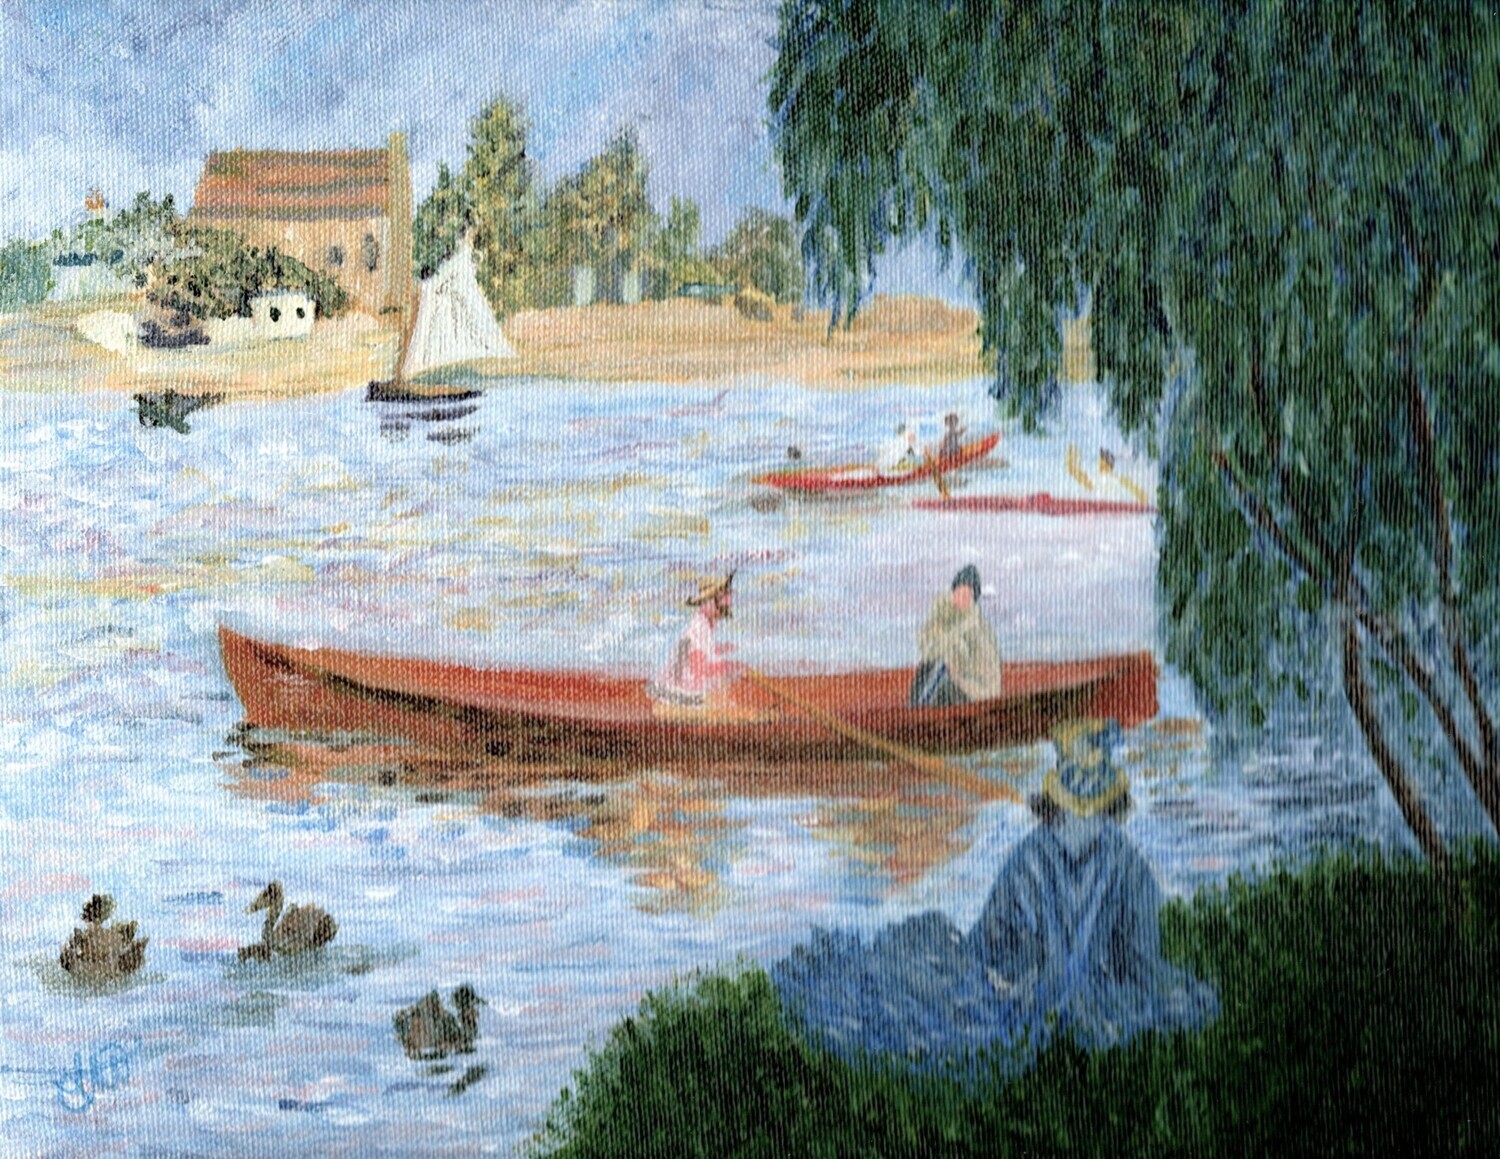 “Boating at Argenrteuil” - Pierre-Auguste Renoir, 1873 (Artist's Interpretation)